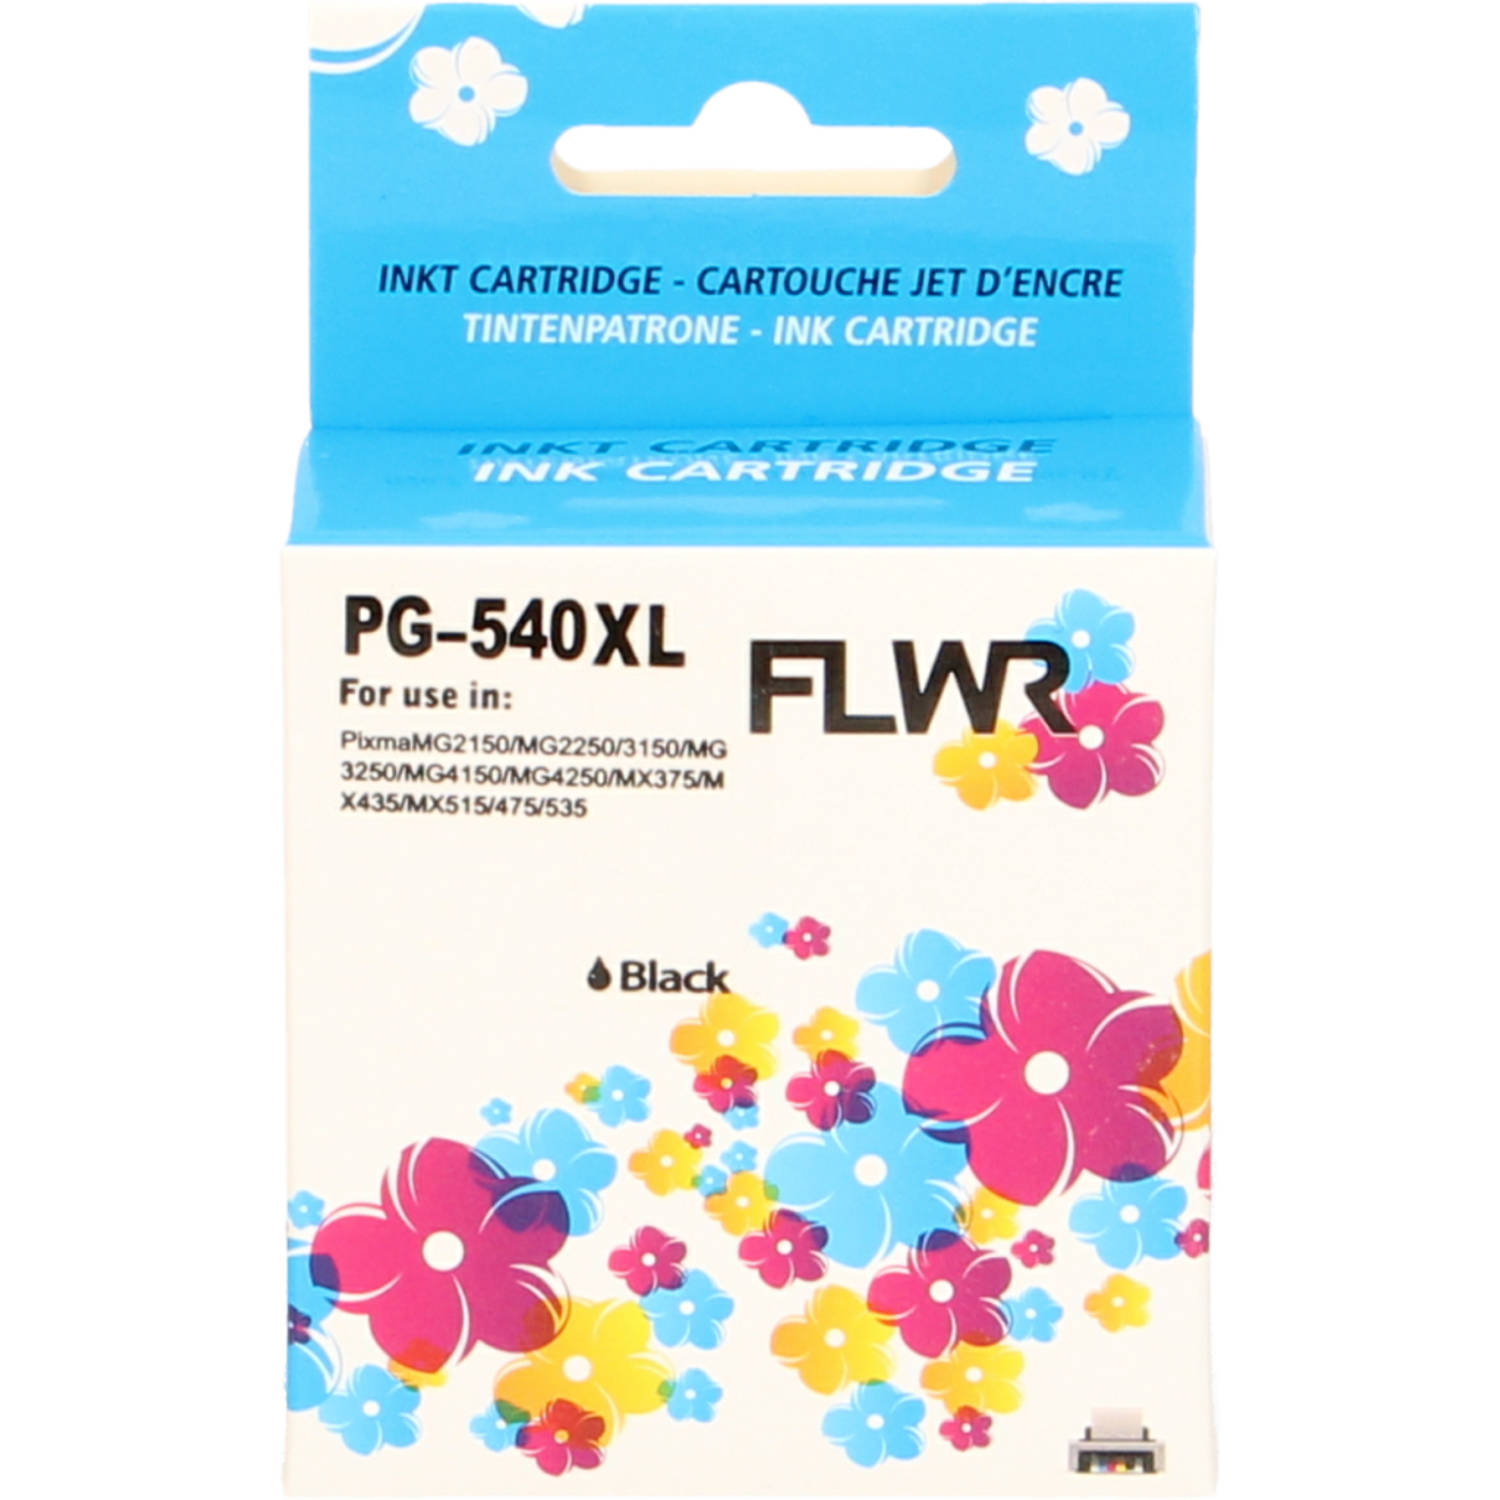 FLWR Canon PG-540XL zwart cartridge